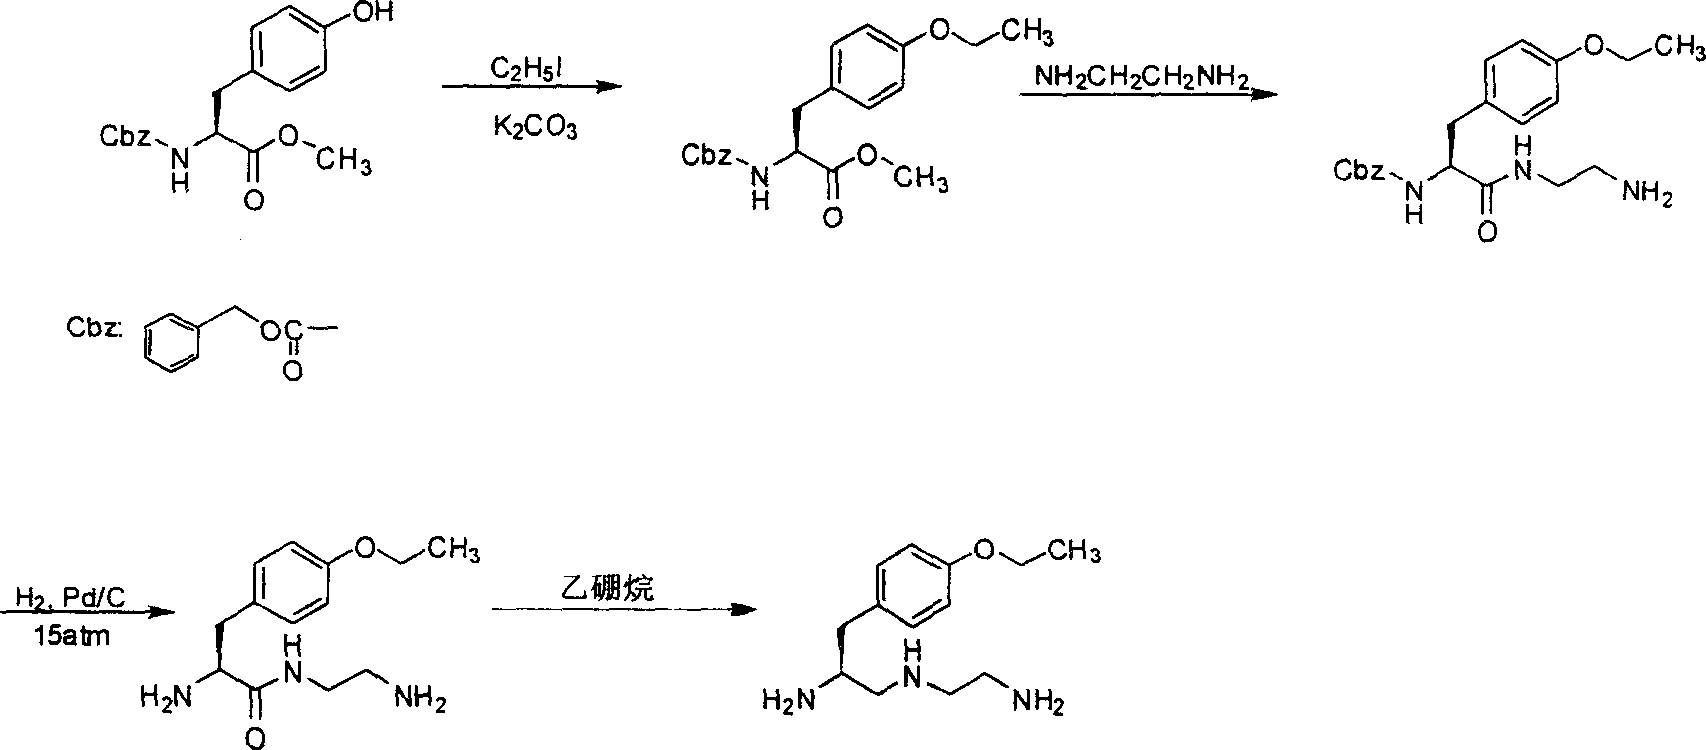 S-1-(4-ethoxybenzyl)-3-azapentane-1,5 diamine preparation method